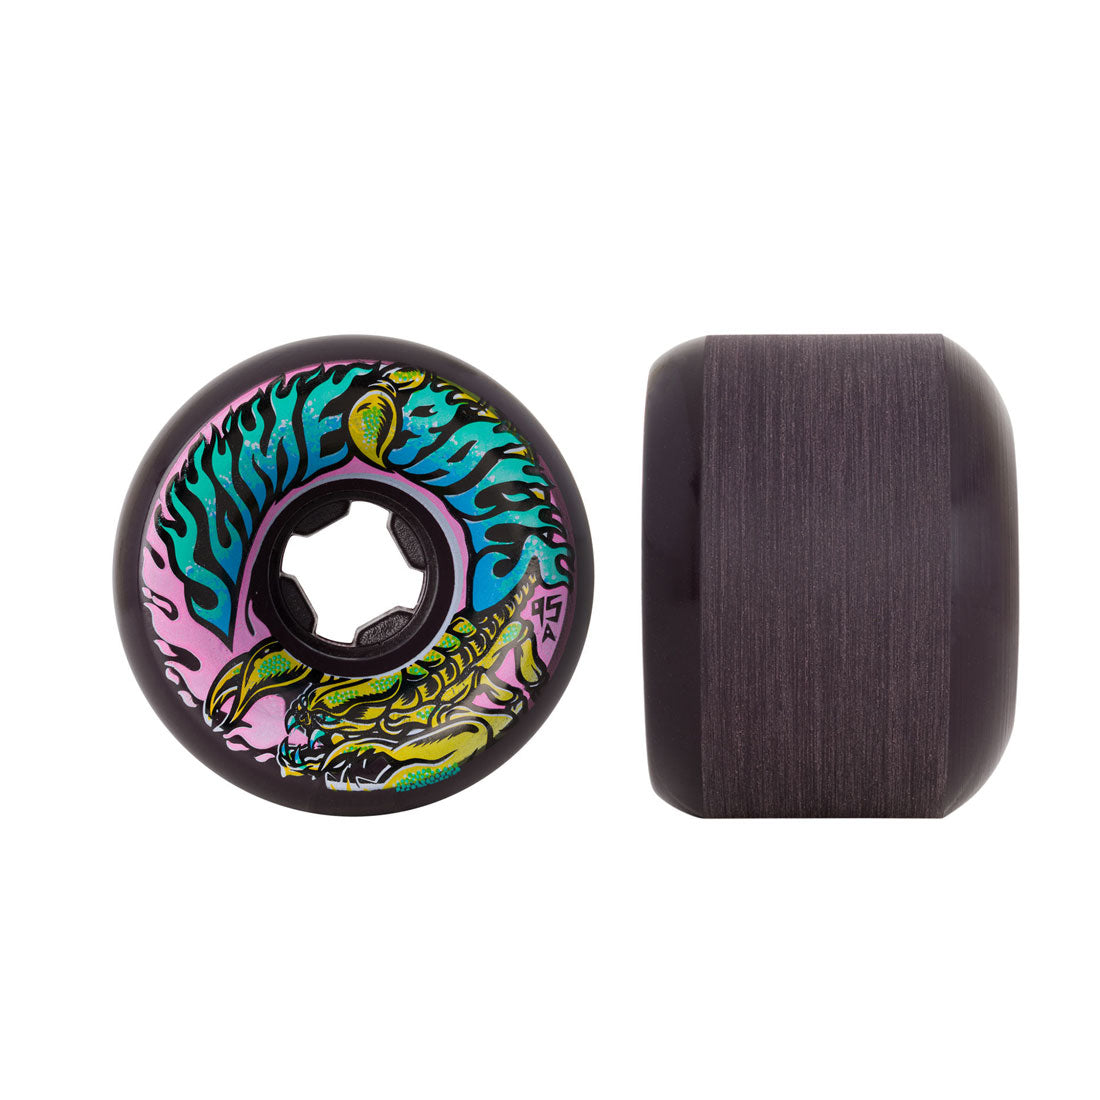 Slime Balls Goooberz Vomits 60mm 95a - Black Skateboard Wheels